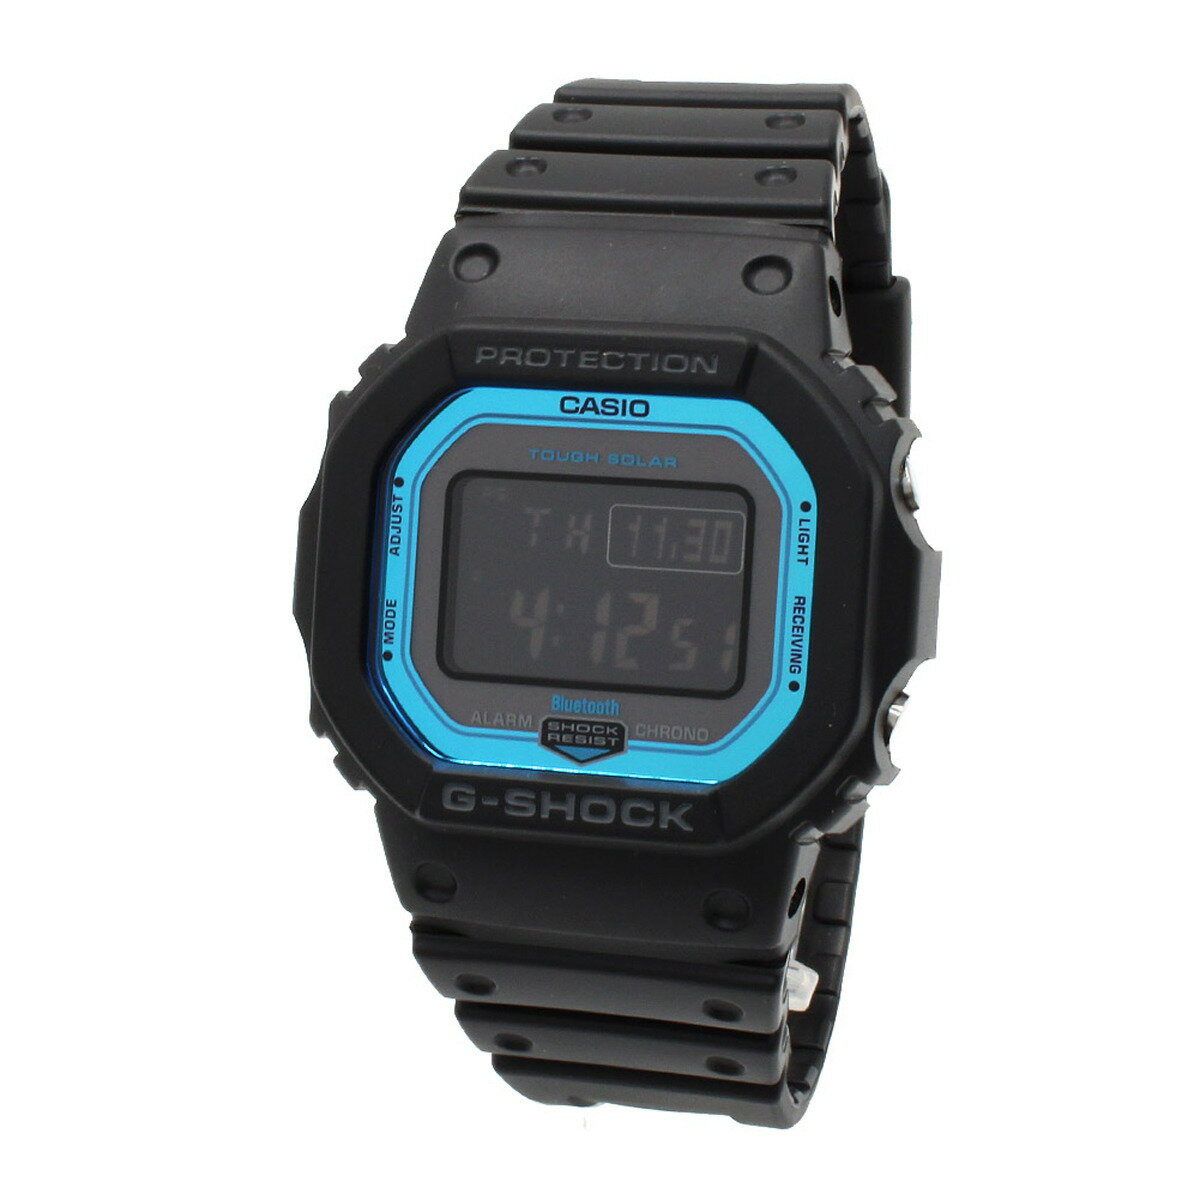 CASIO カシオ G-SHOCK Gショック GW-B5600-2DR DIGITAL ソーラー Bluetooth 腕時計 ウォッチ レディース メンズ 海外正規品